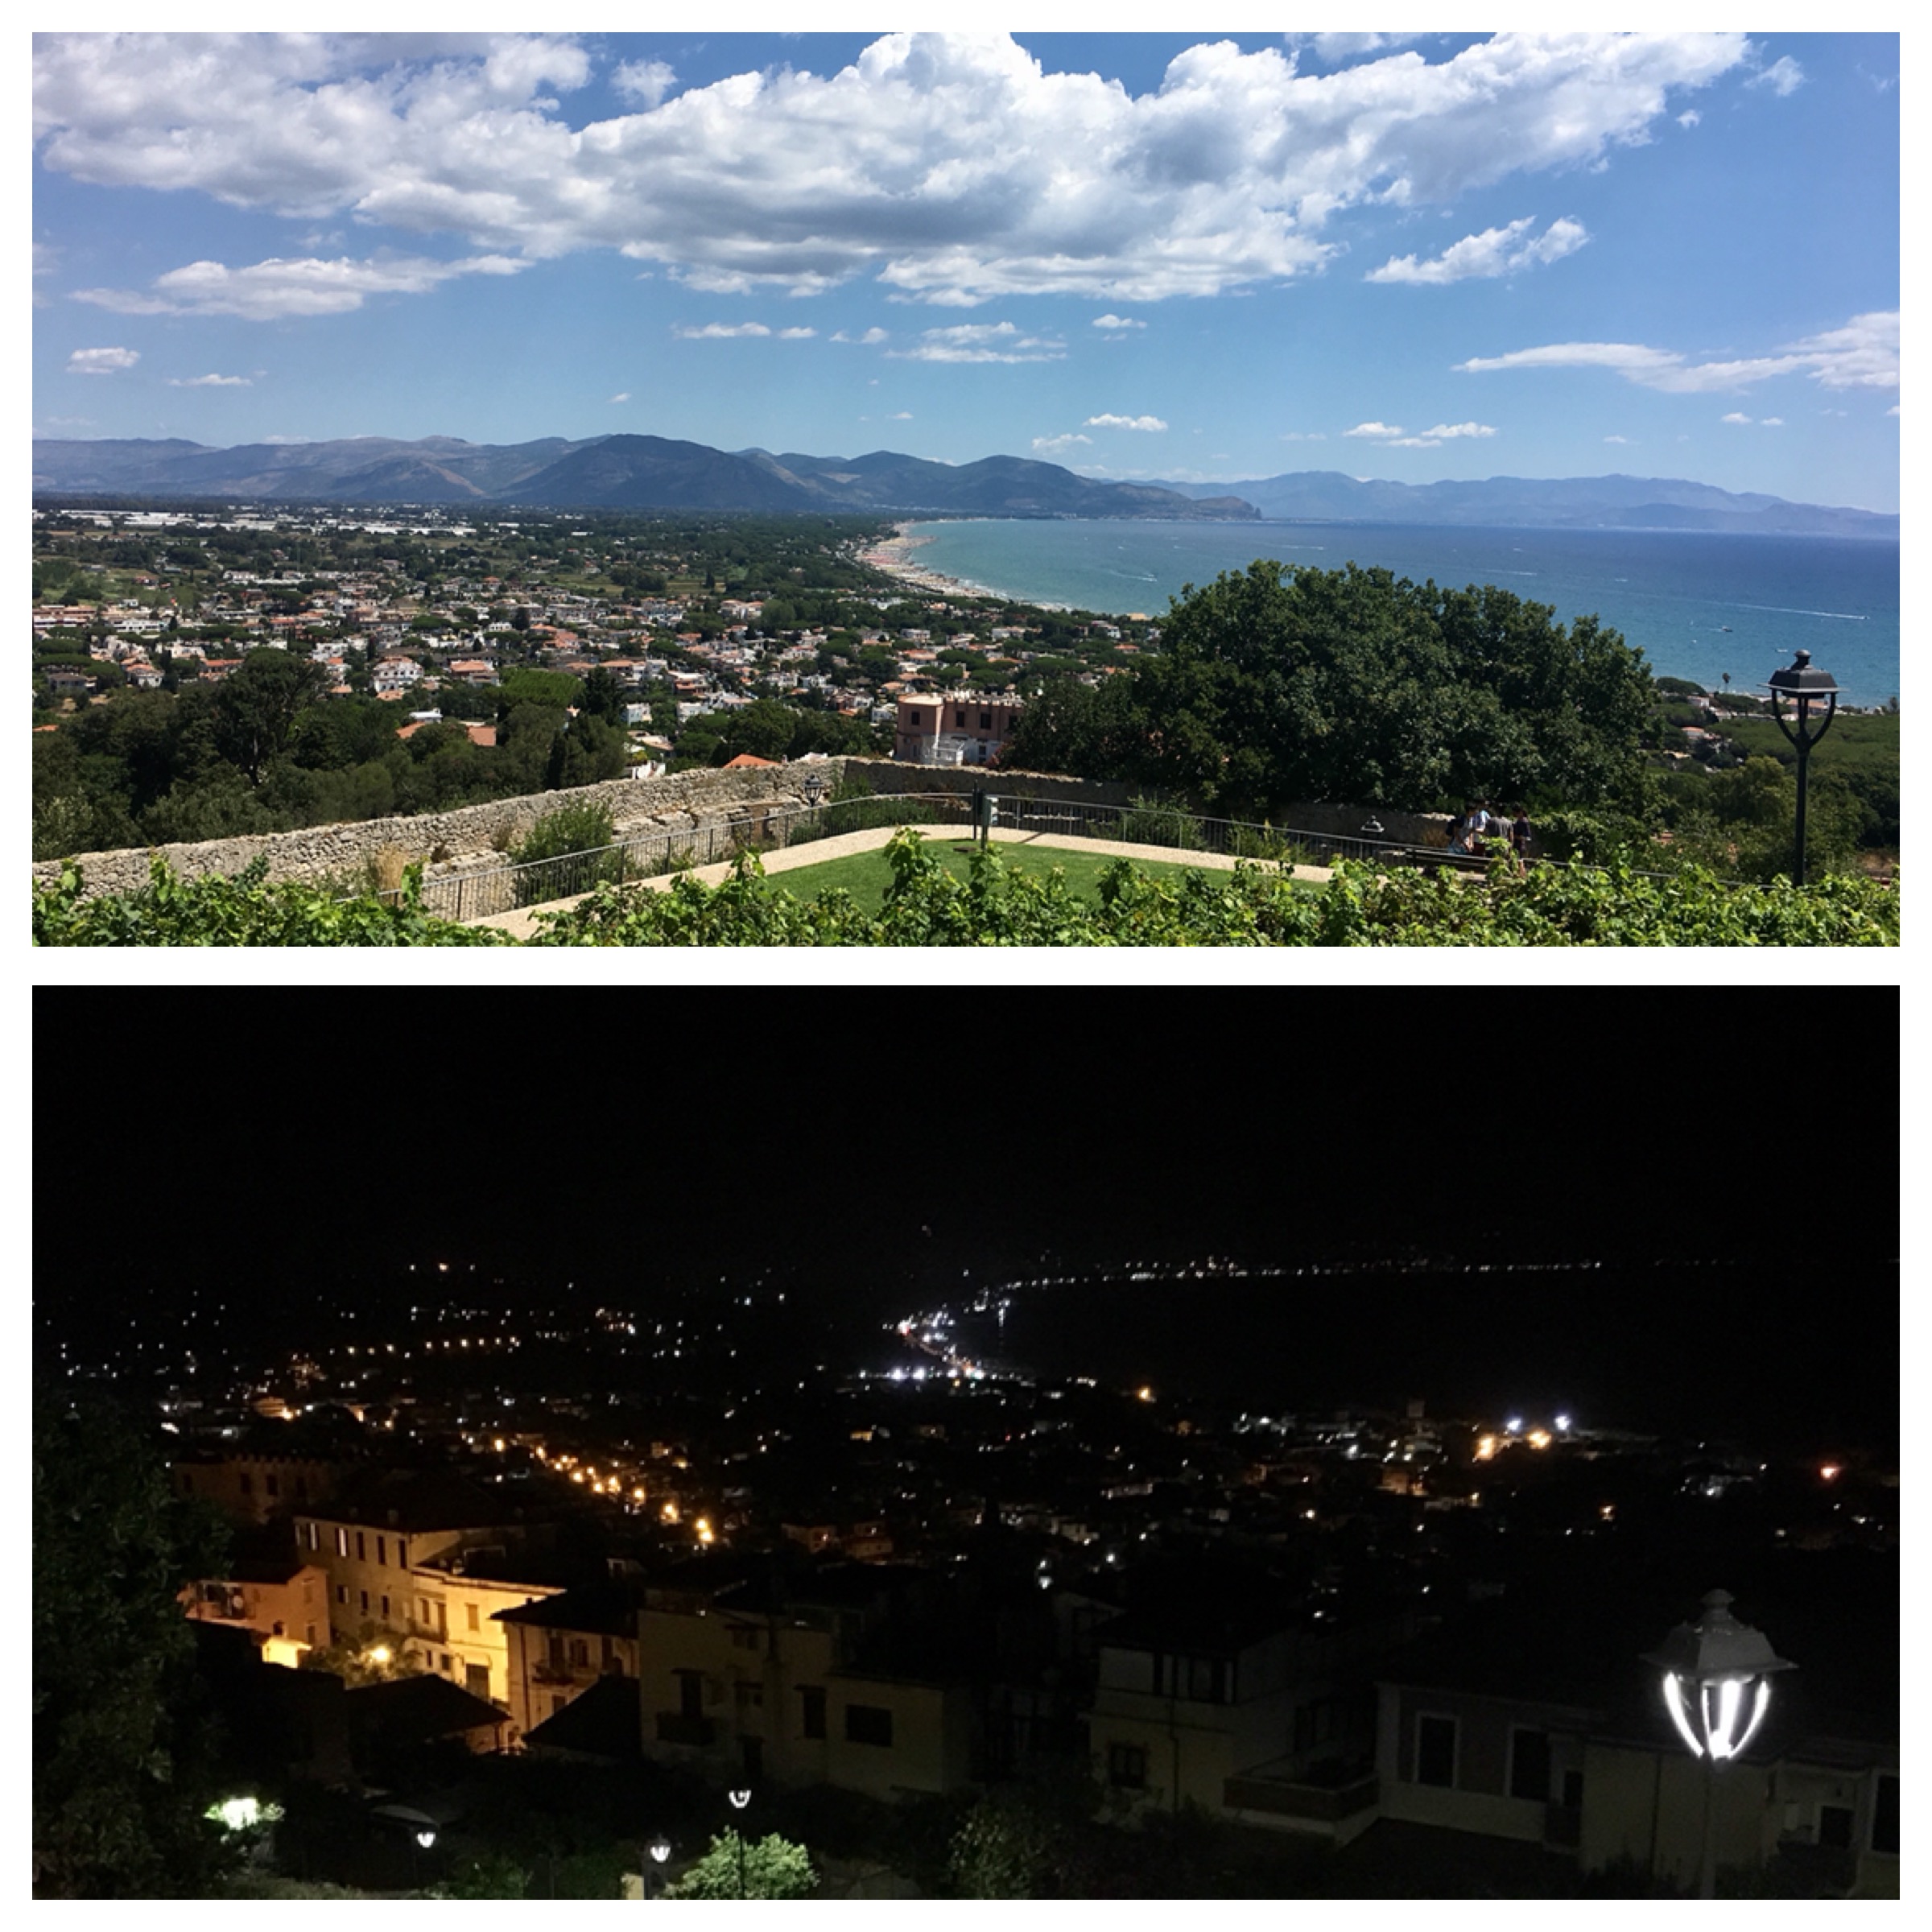 The Italian Blog: San Felice Circeo. On the footstep of Circe the Goddes